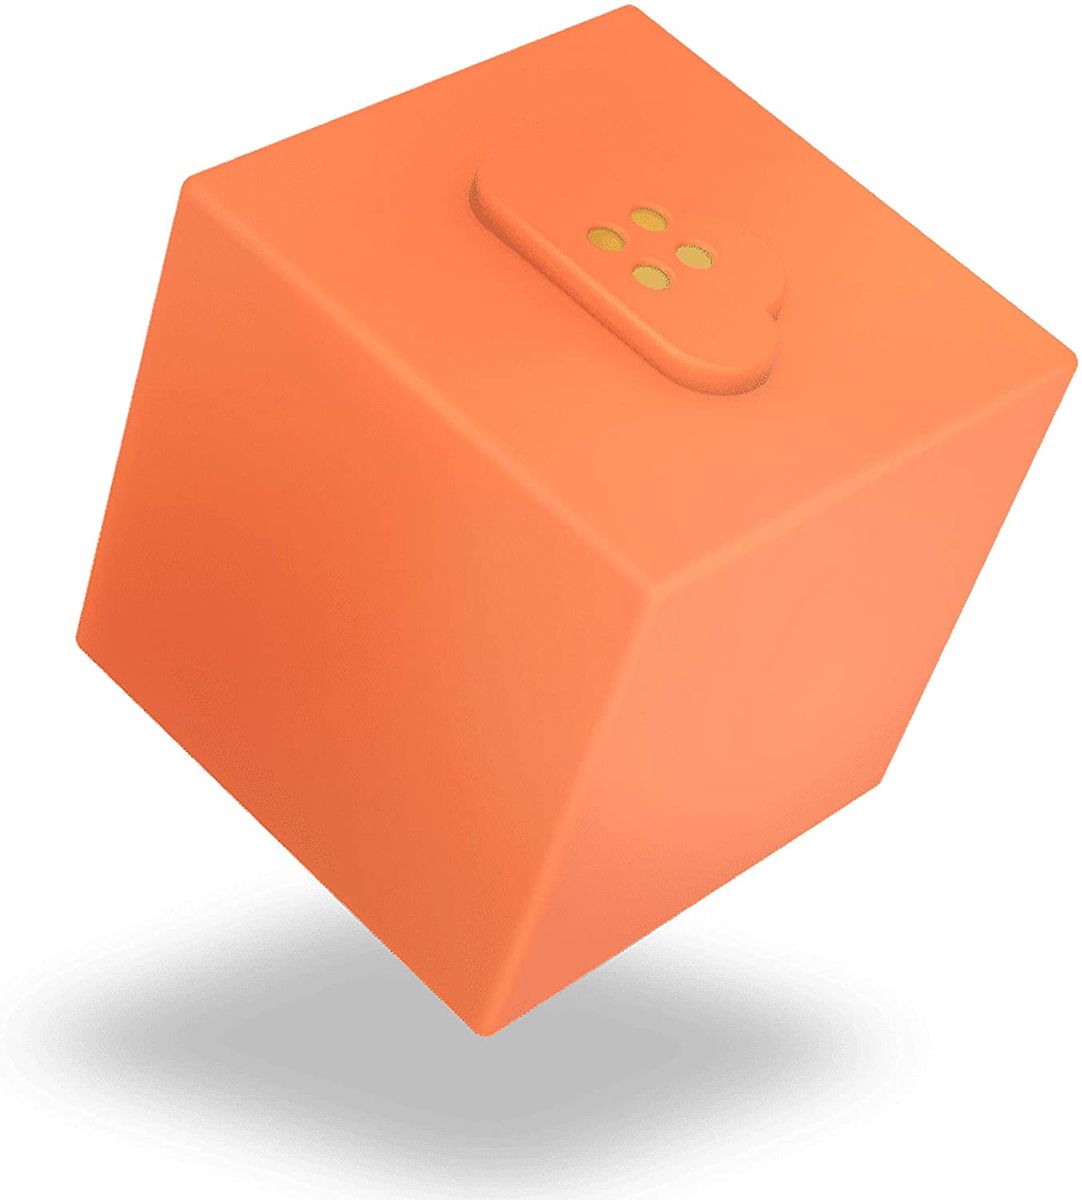 homee modular Smart Home Central ZigBee-Cube